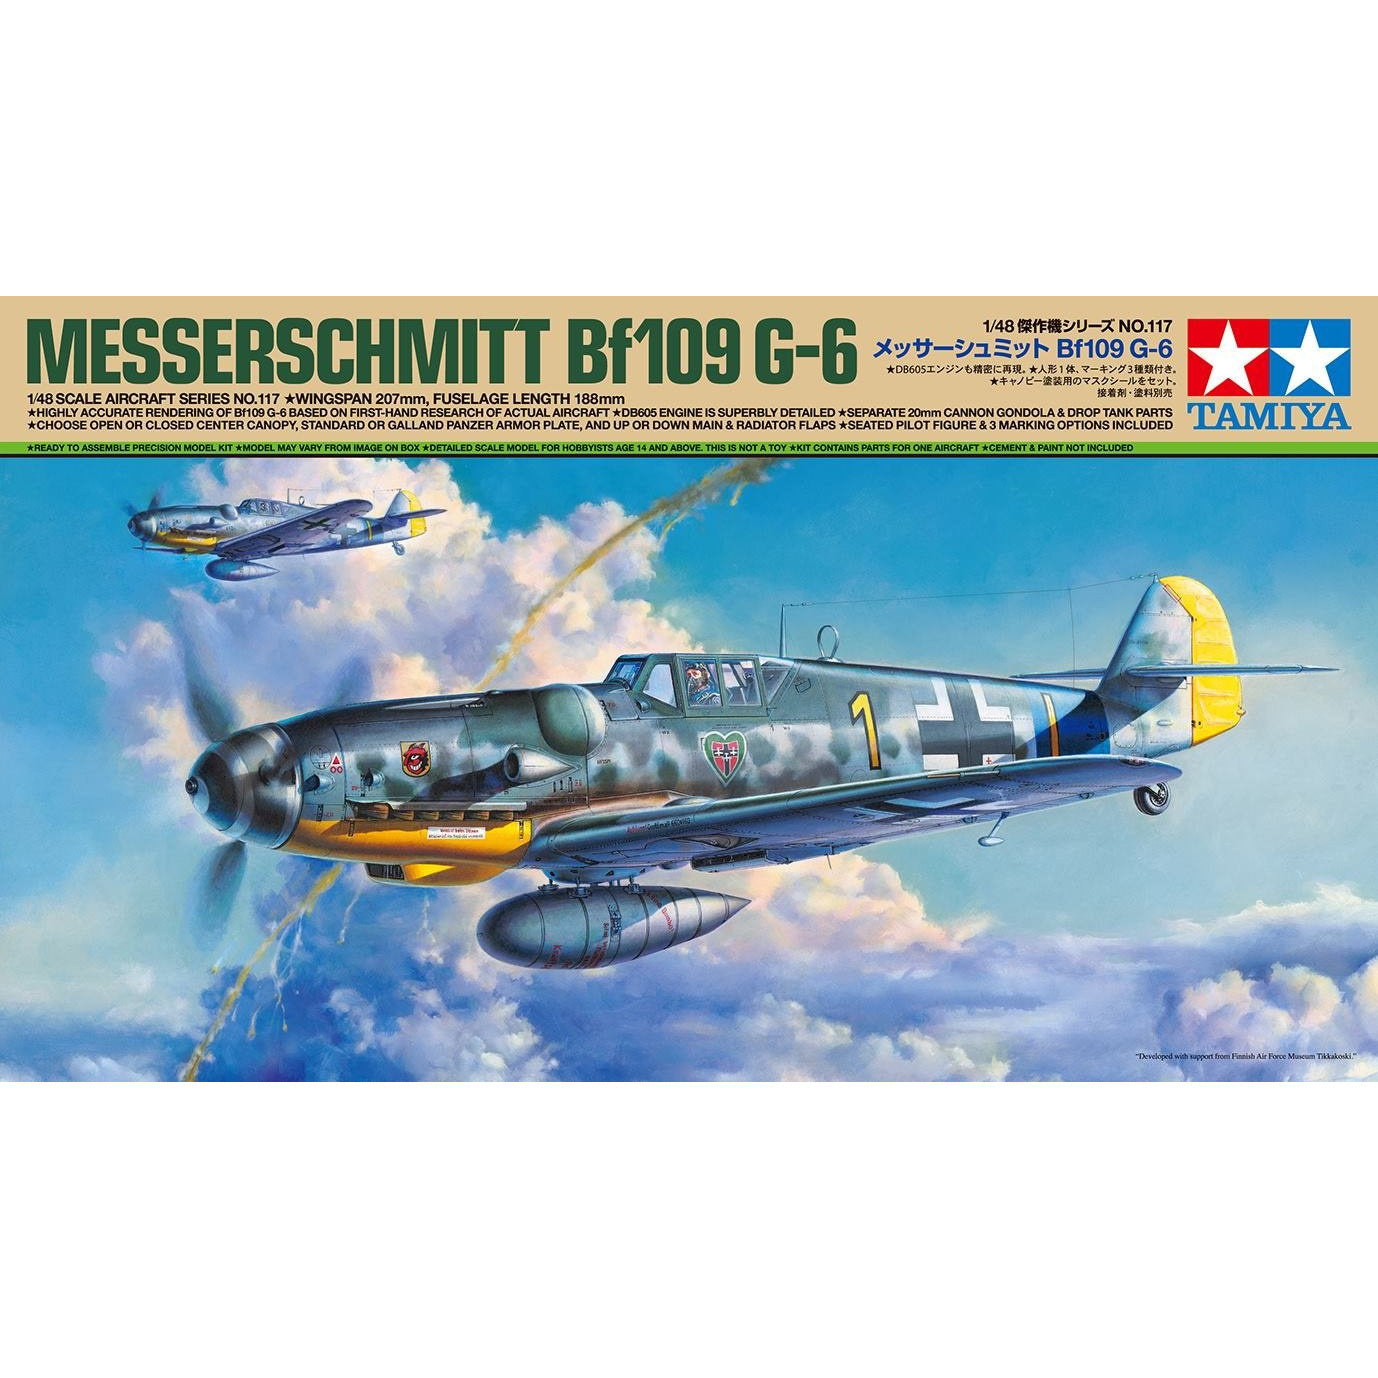 Messerschmitt Bf 109 G-6 1/48 by Tamiya